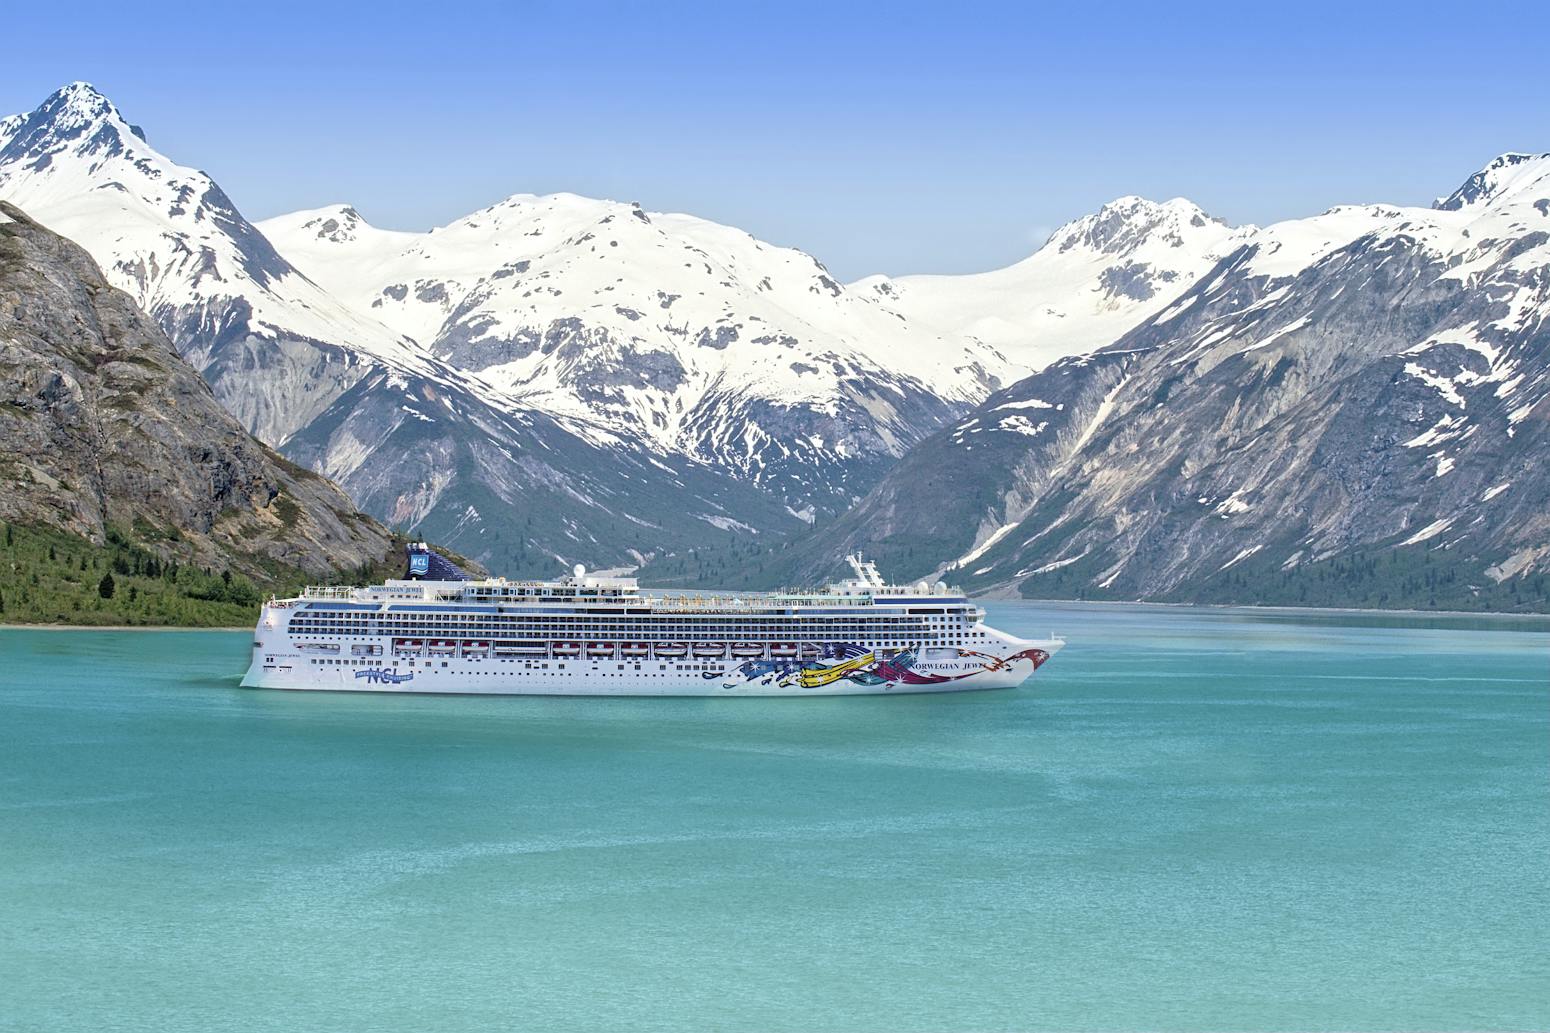 Norwegian Cruise Line Norwegian Jewel